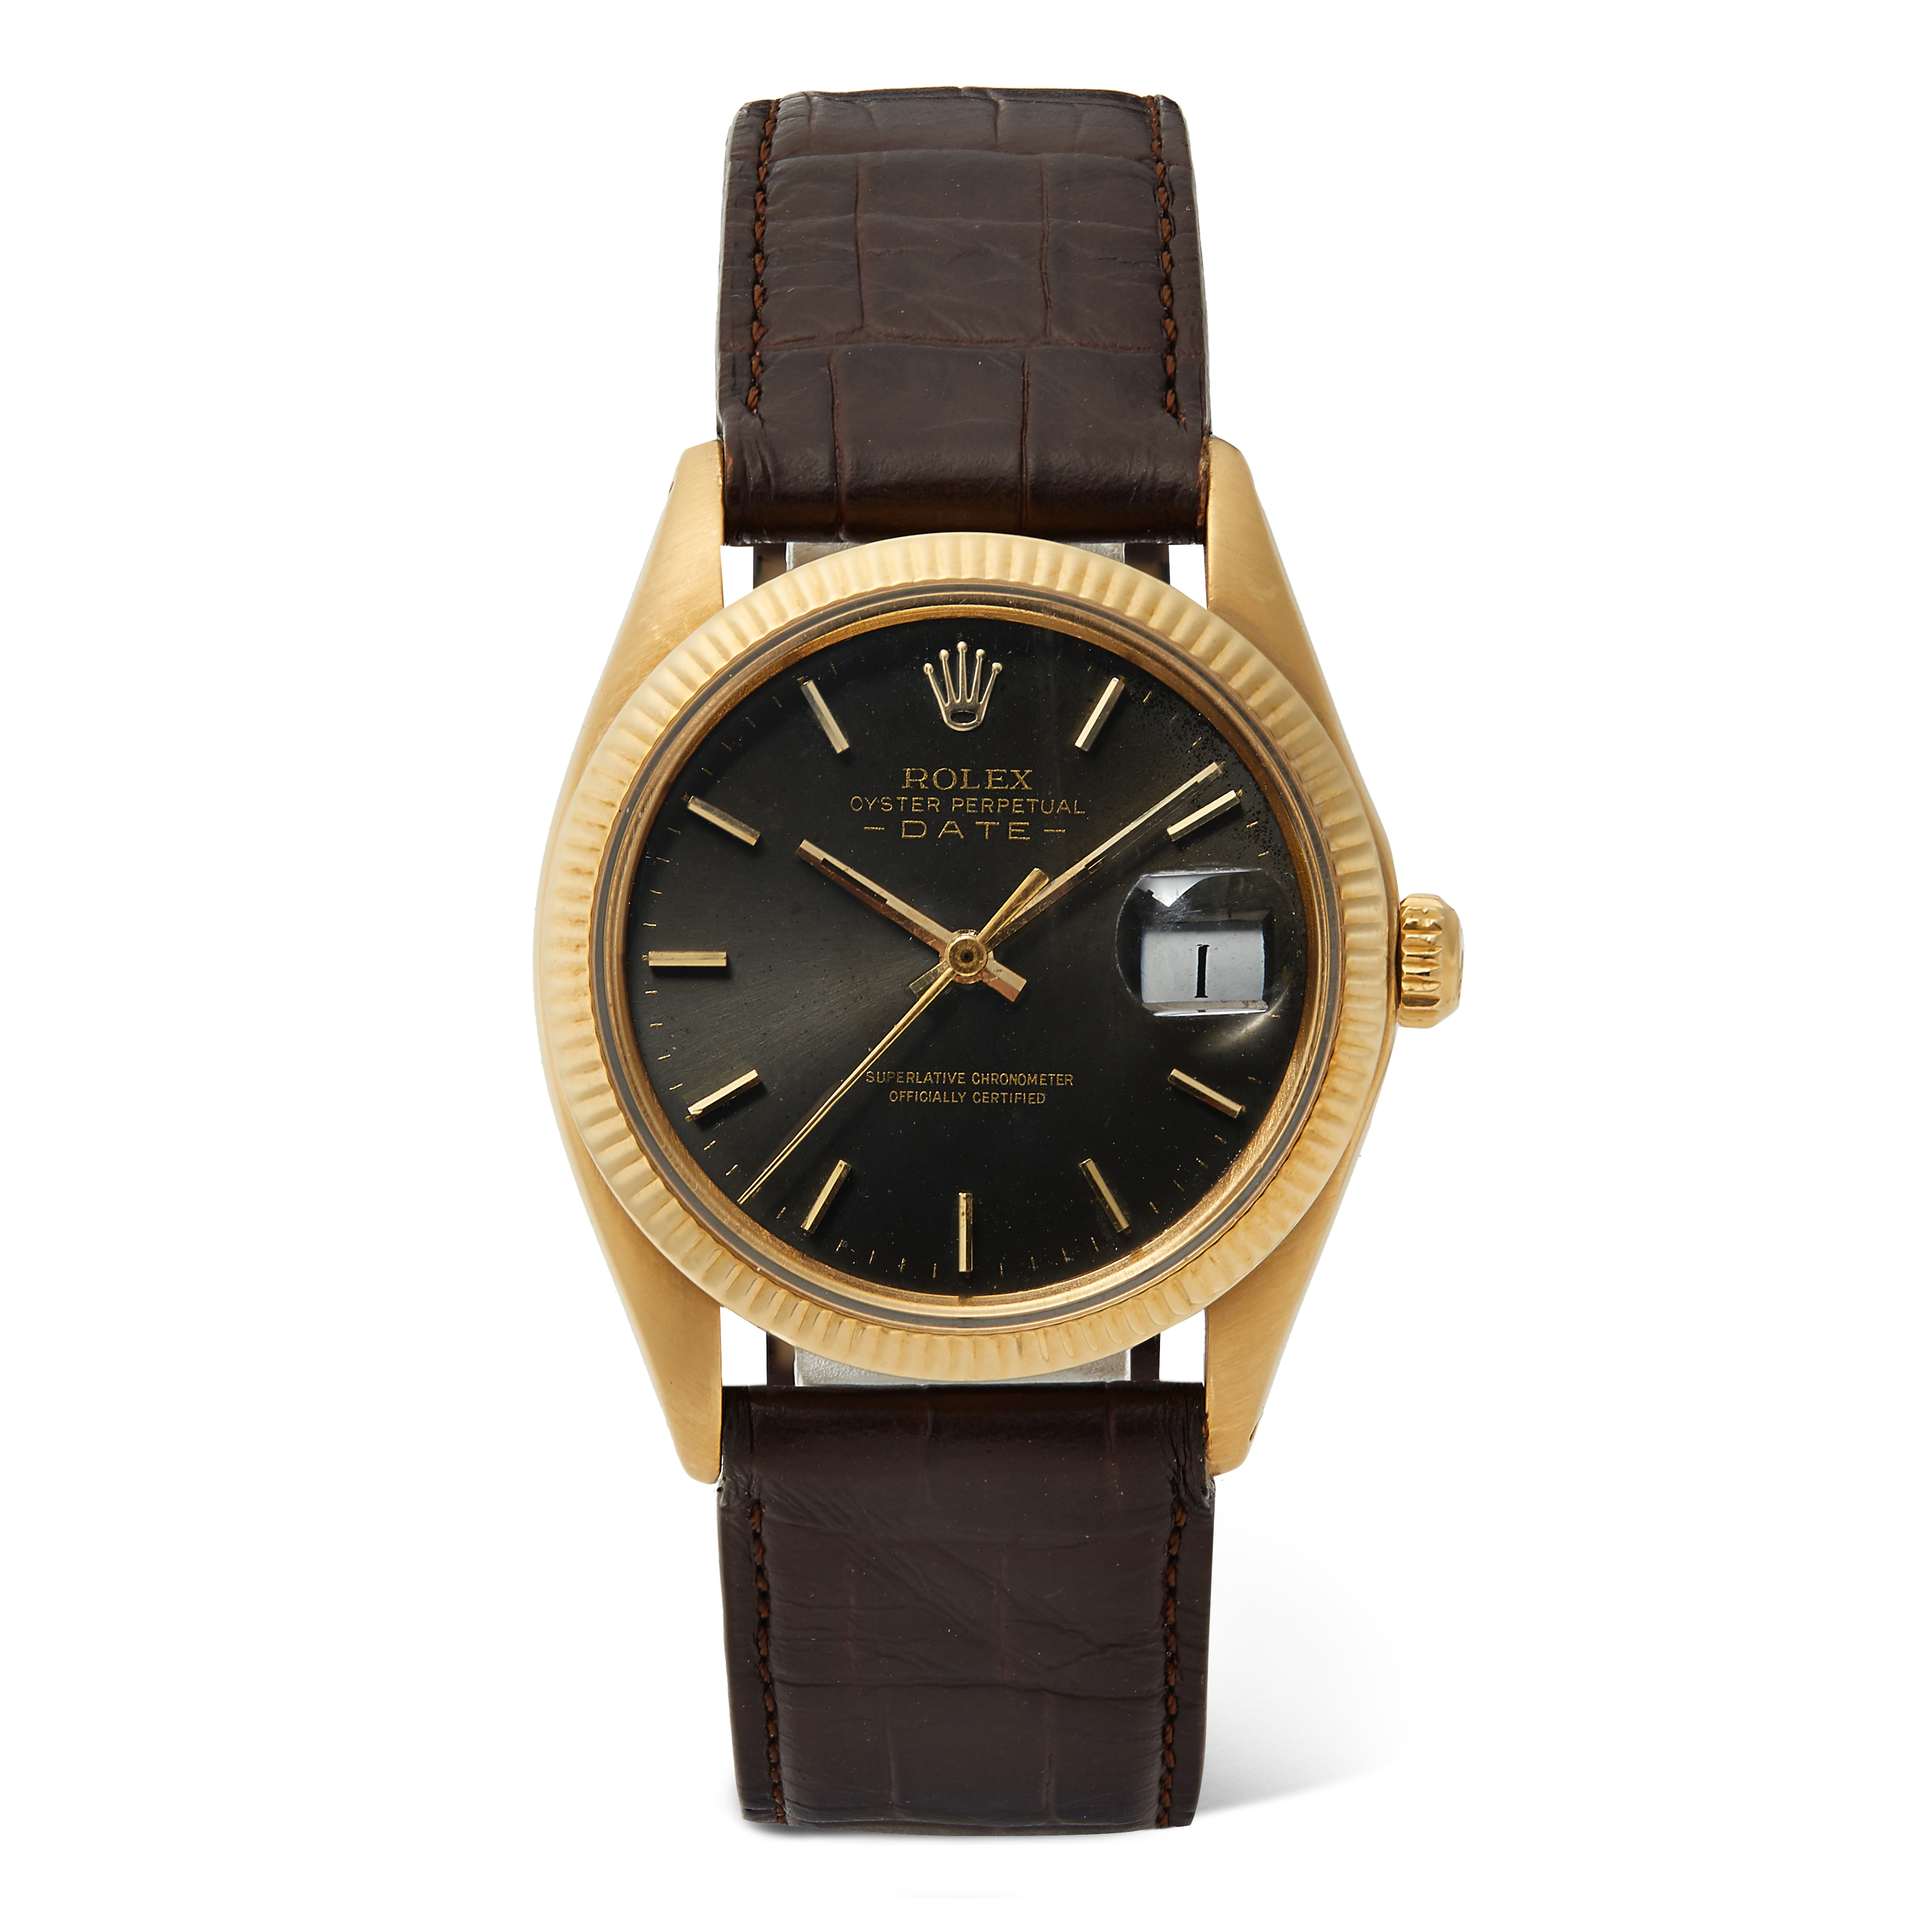 Rolex - an 18ct gold Oyster Perpetual Date wrist watch, circa 1974.